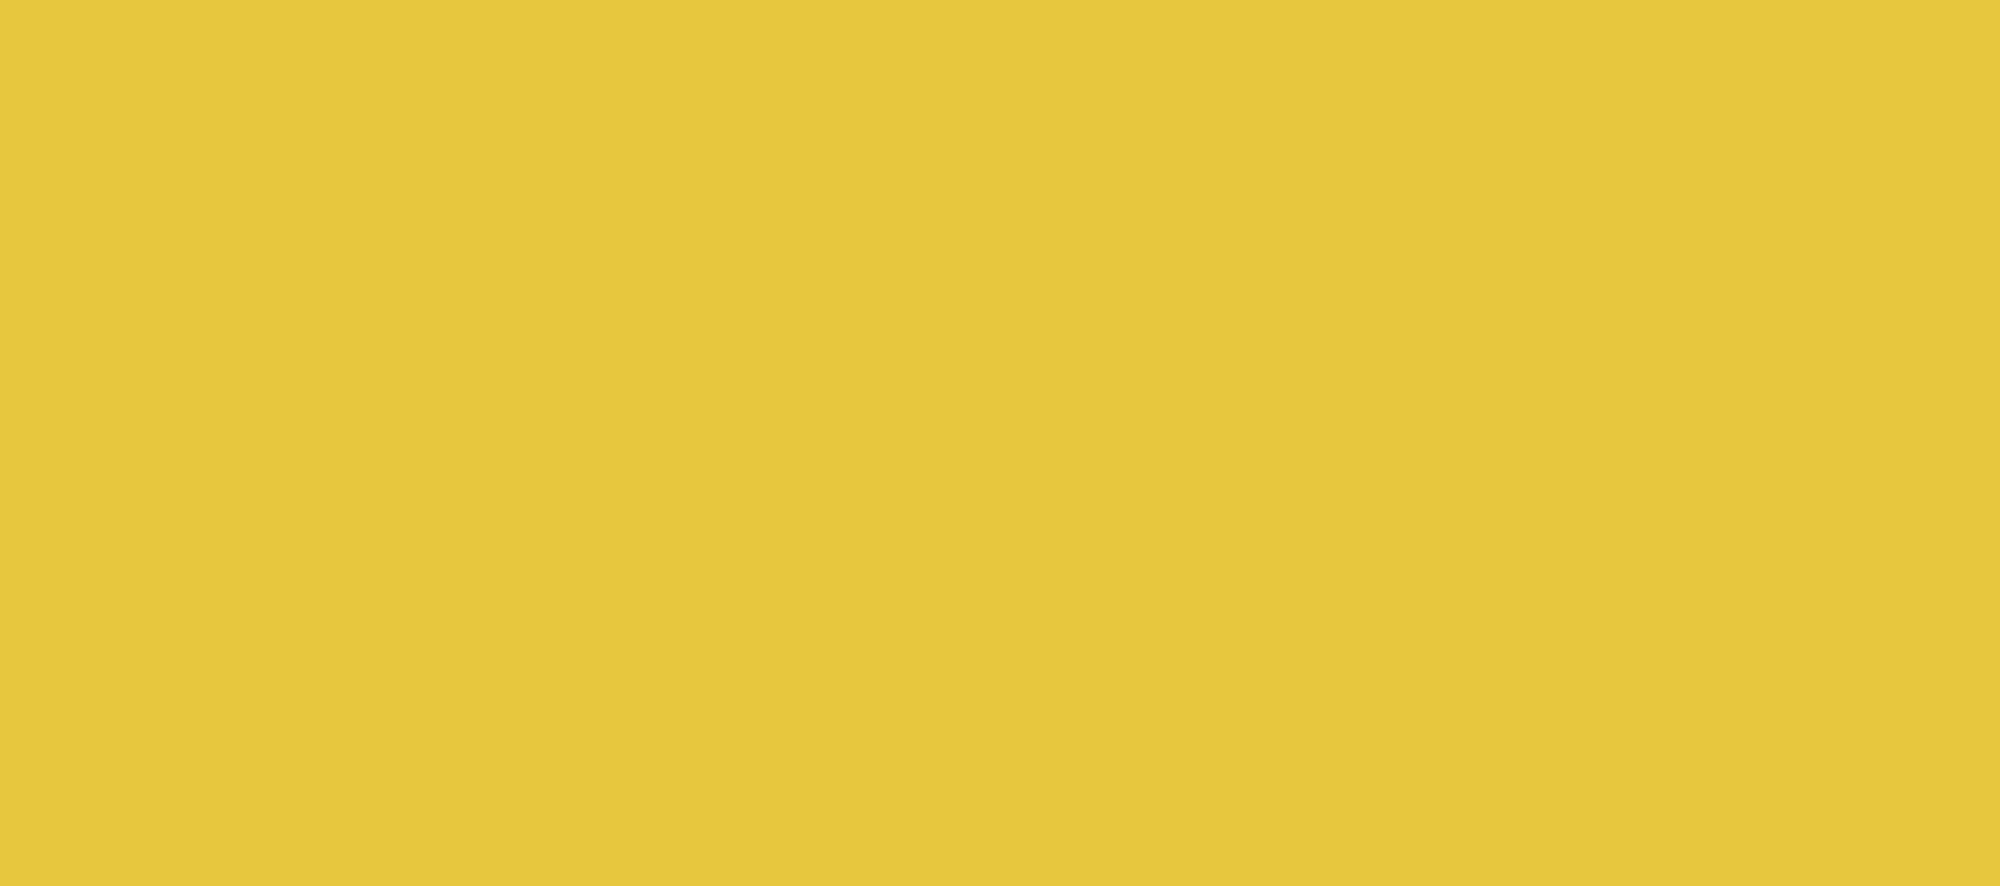 Monochrome jaune